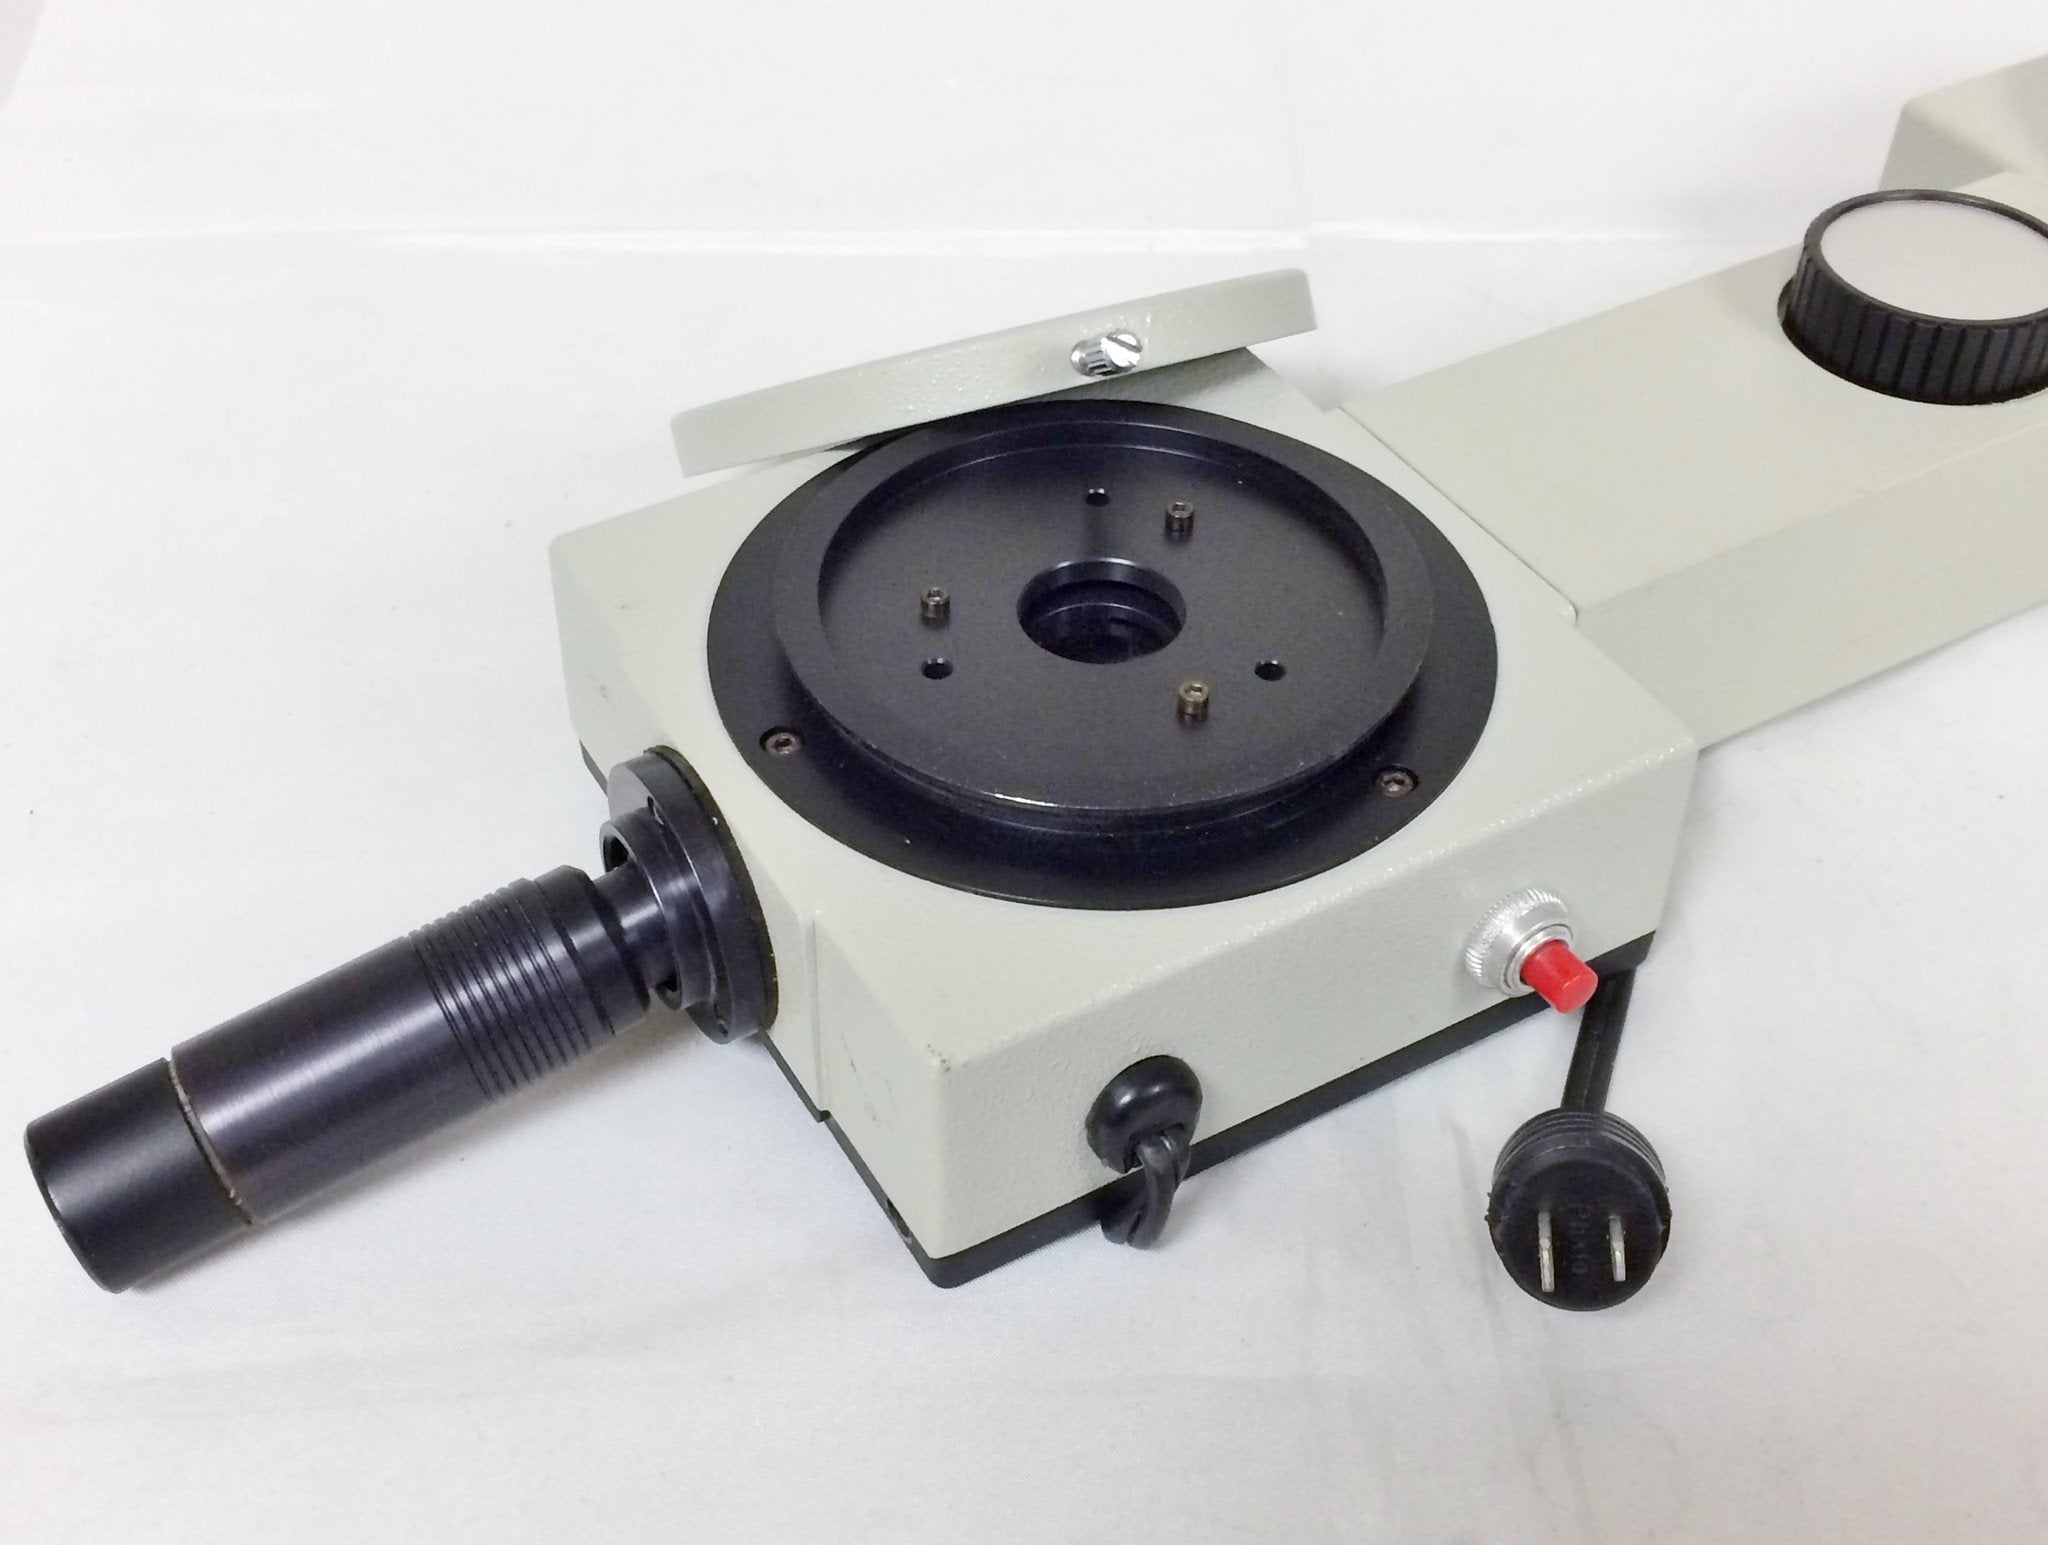 Bausch & Lomb Dual Viewing Arm for Balplan Microscope